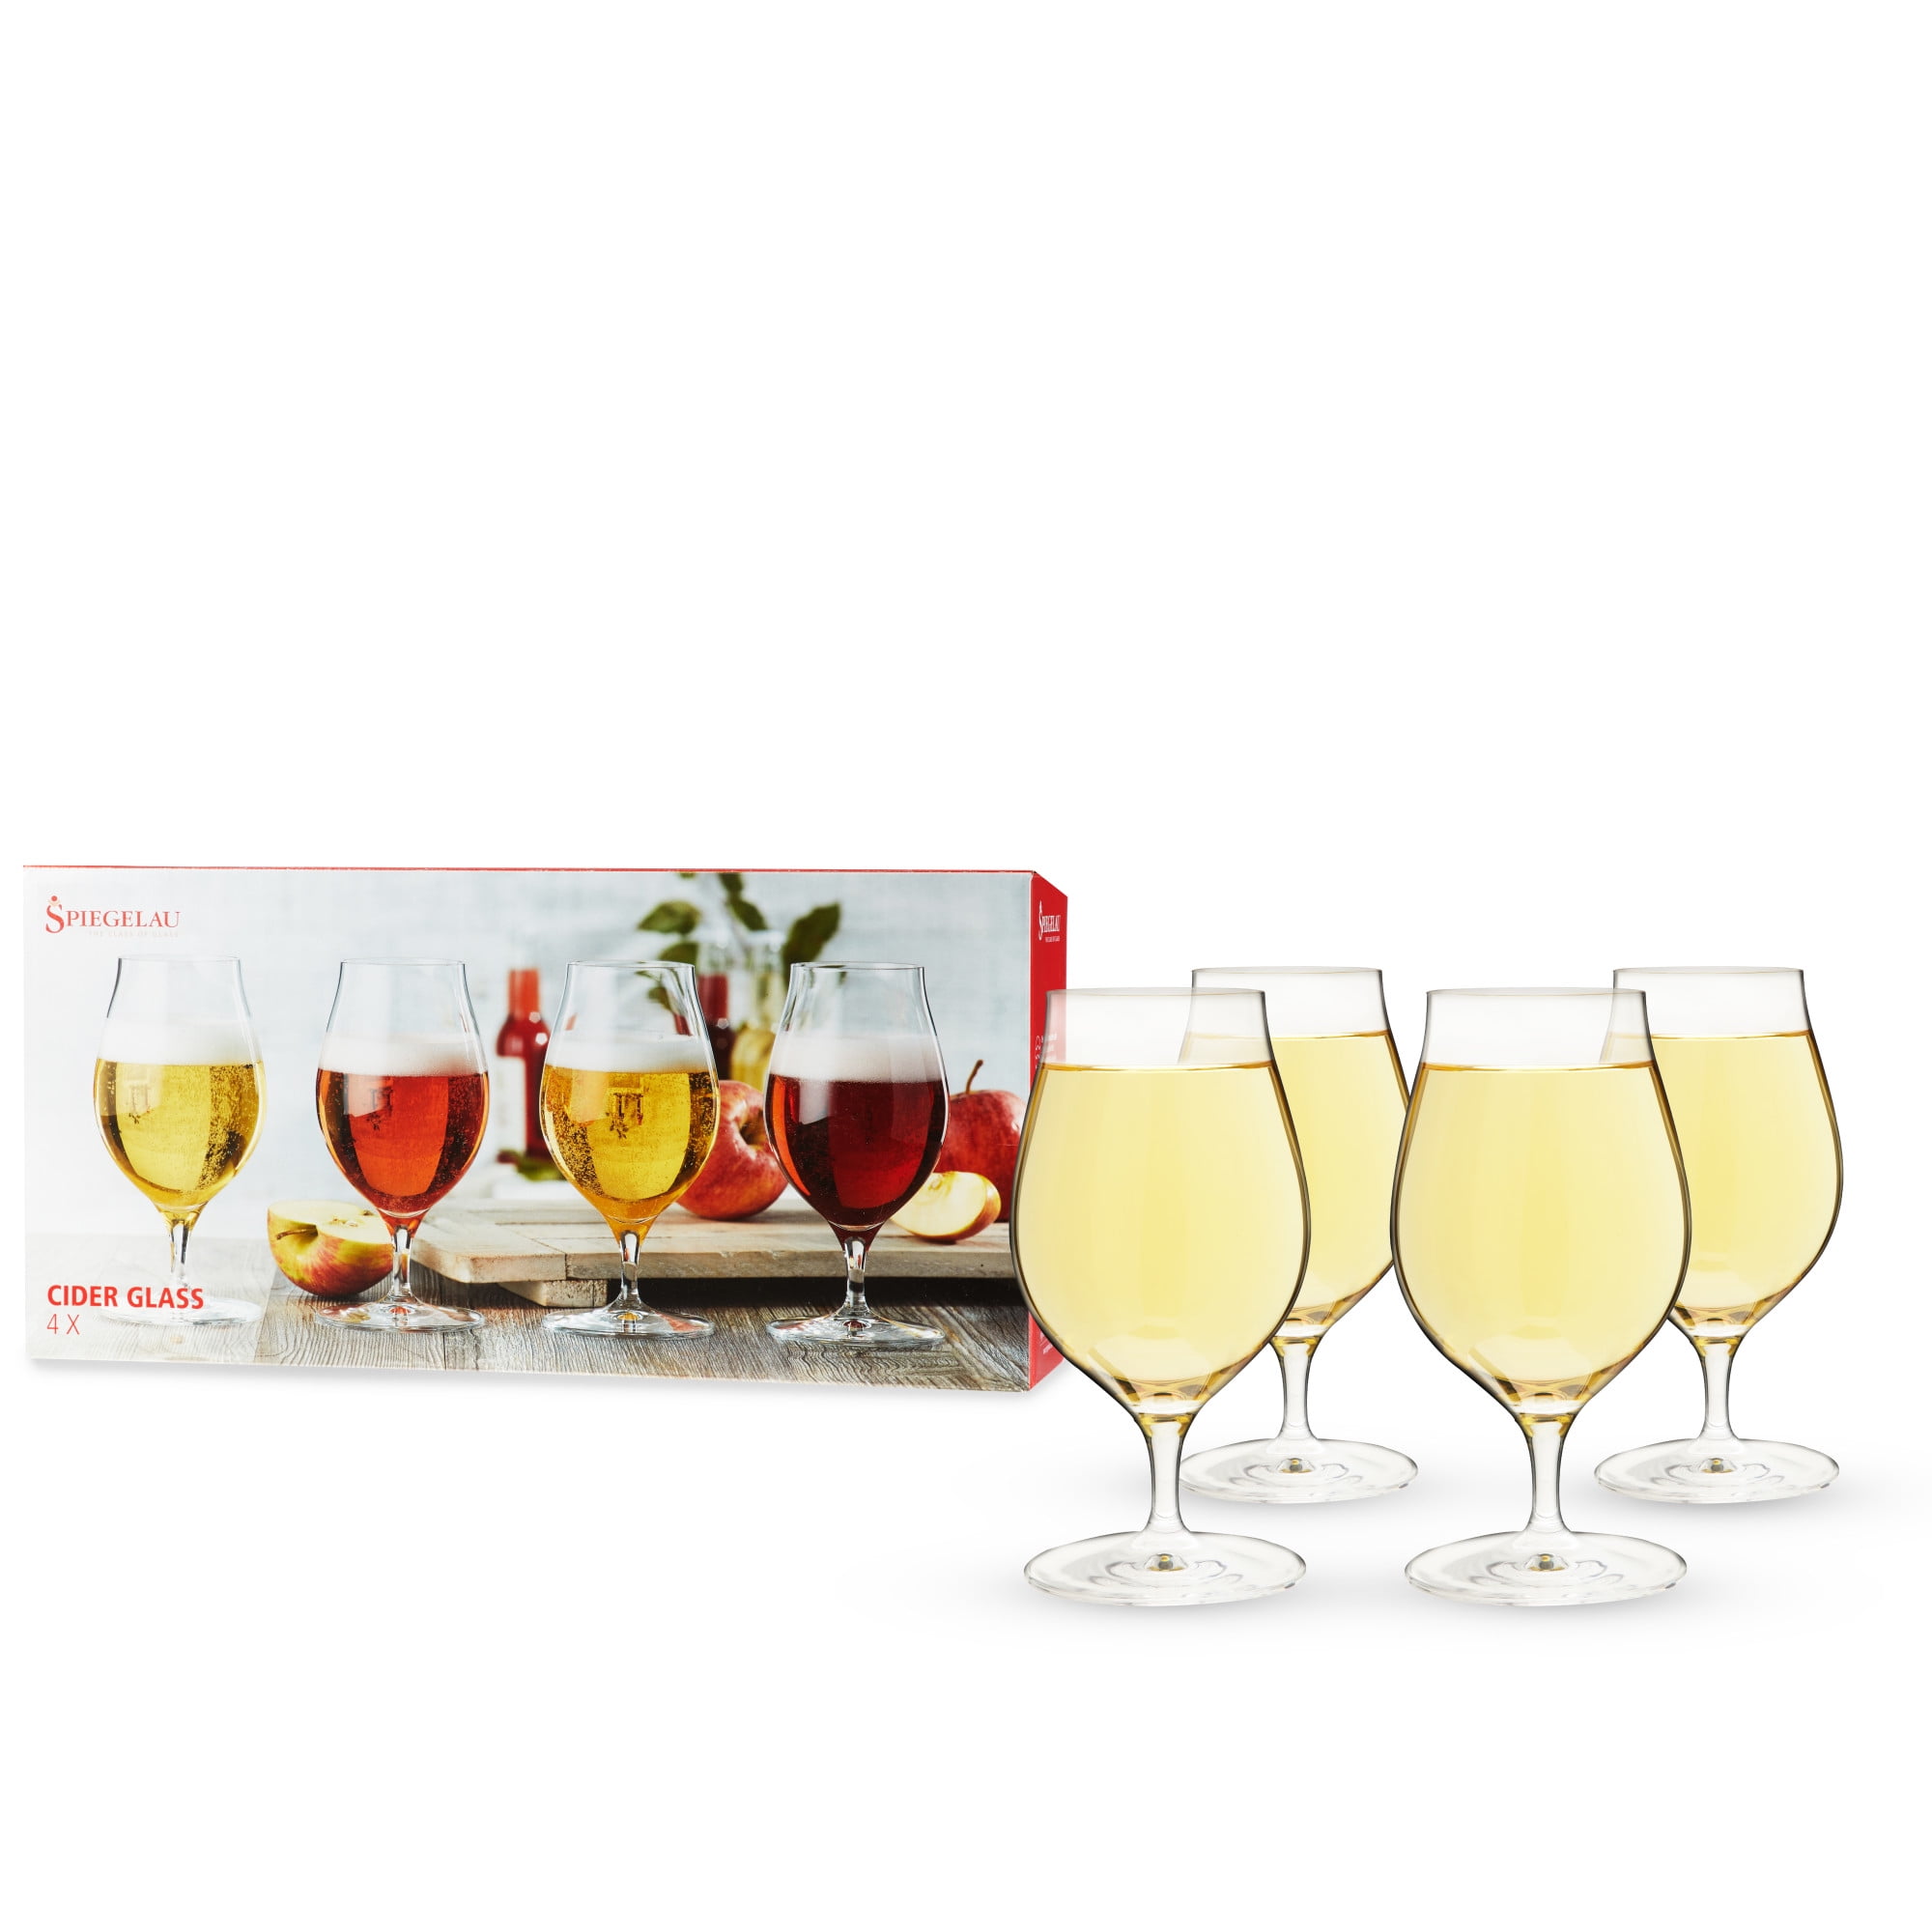 Spiegelau Classics Beer Connoisseur Gift Set (Set of 4) - Winestuff